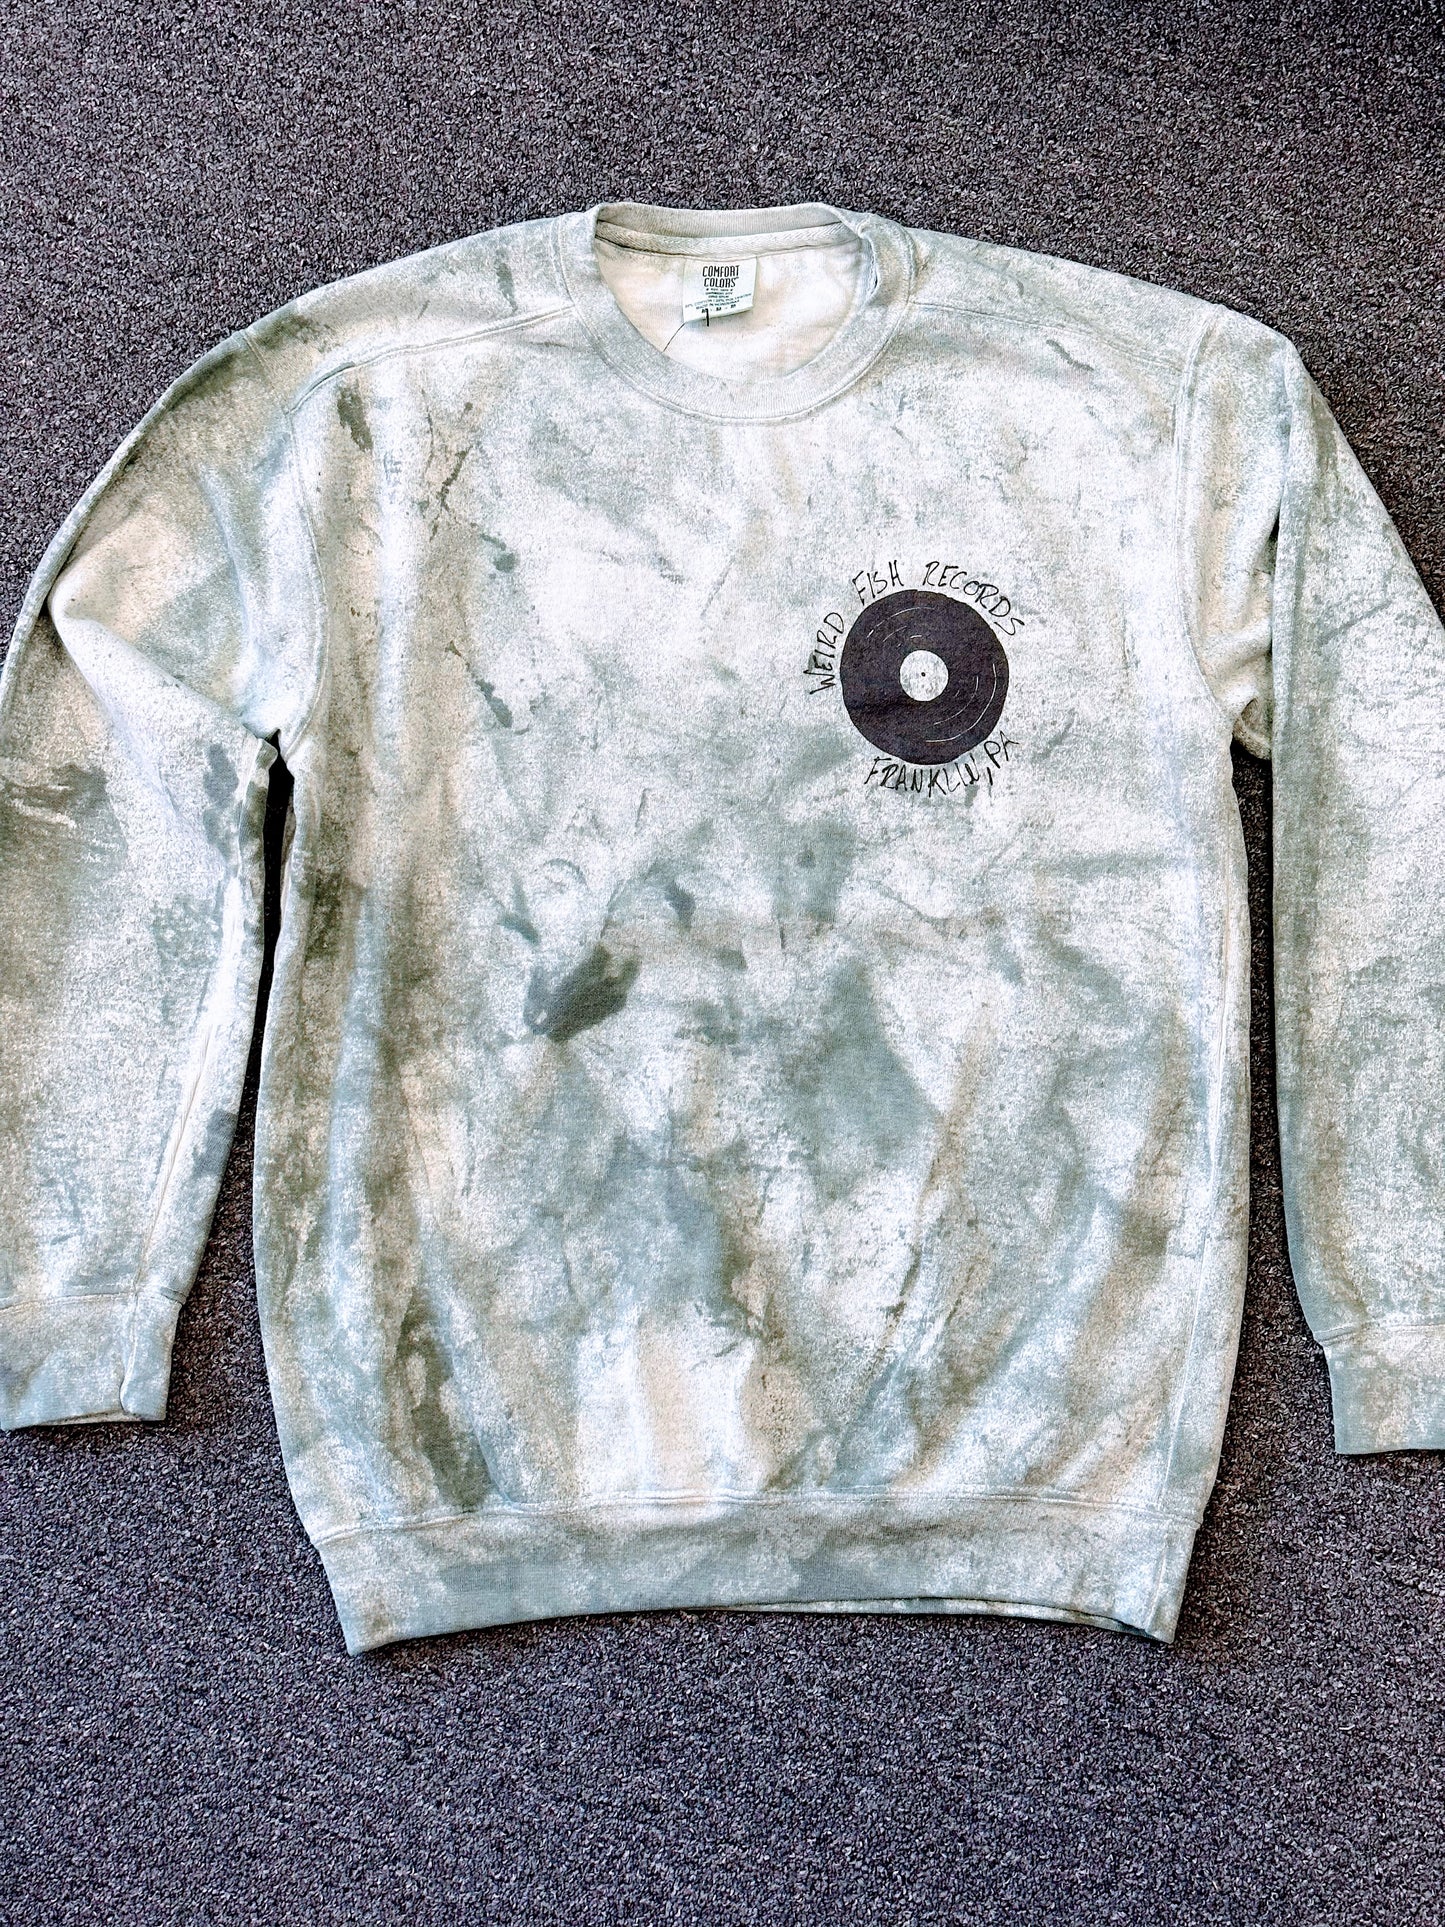 Weird Fish Records Crewneck Sweatshirt Comfort Colors Color Splash